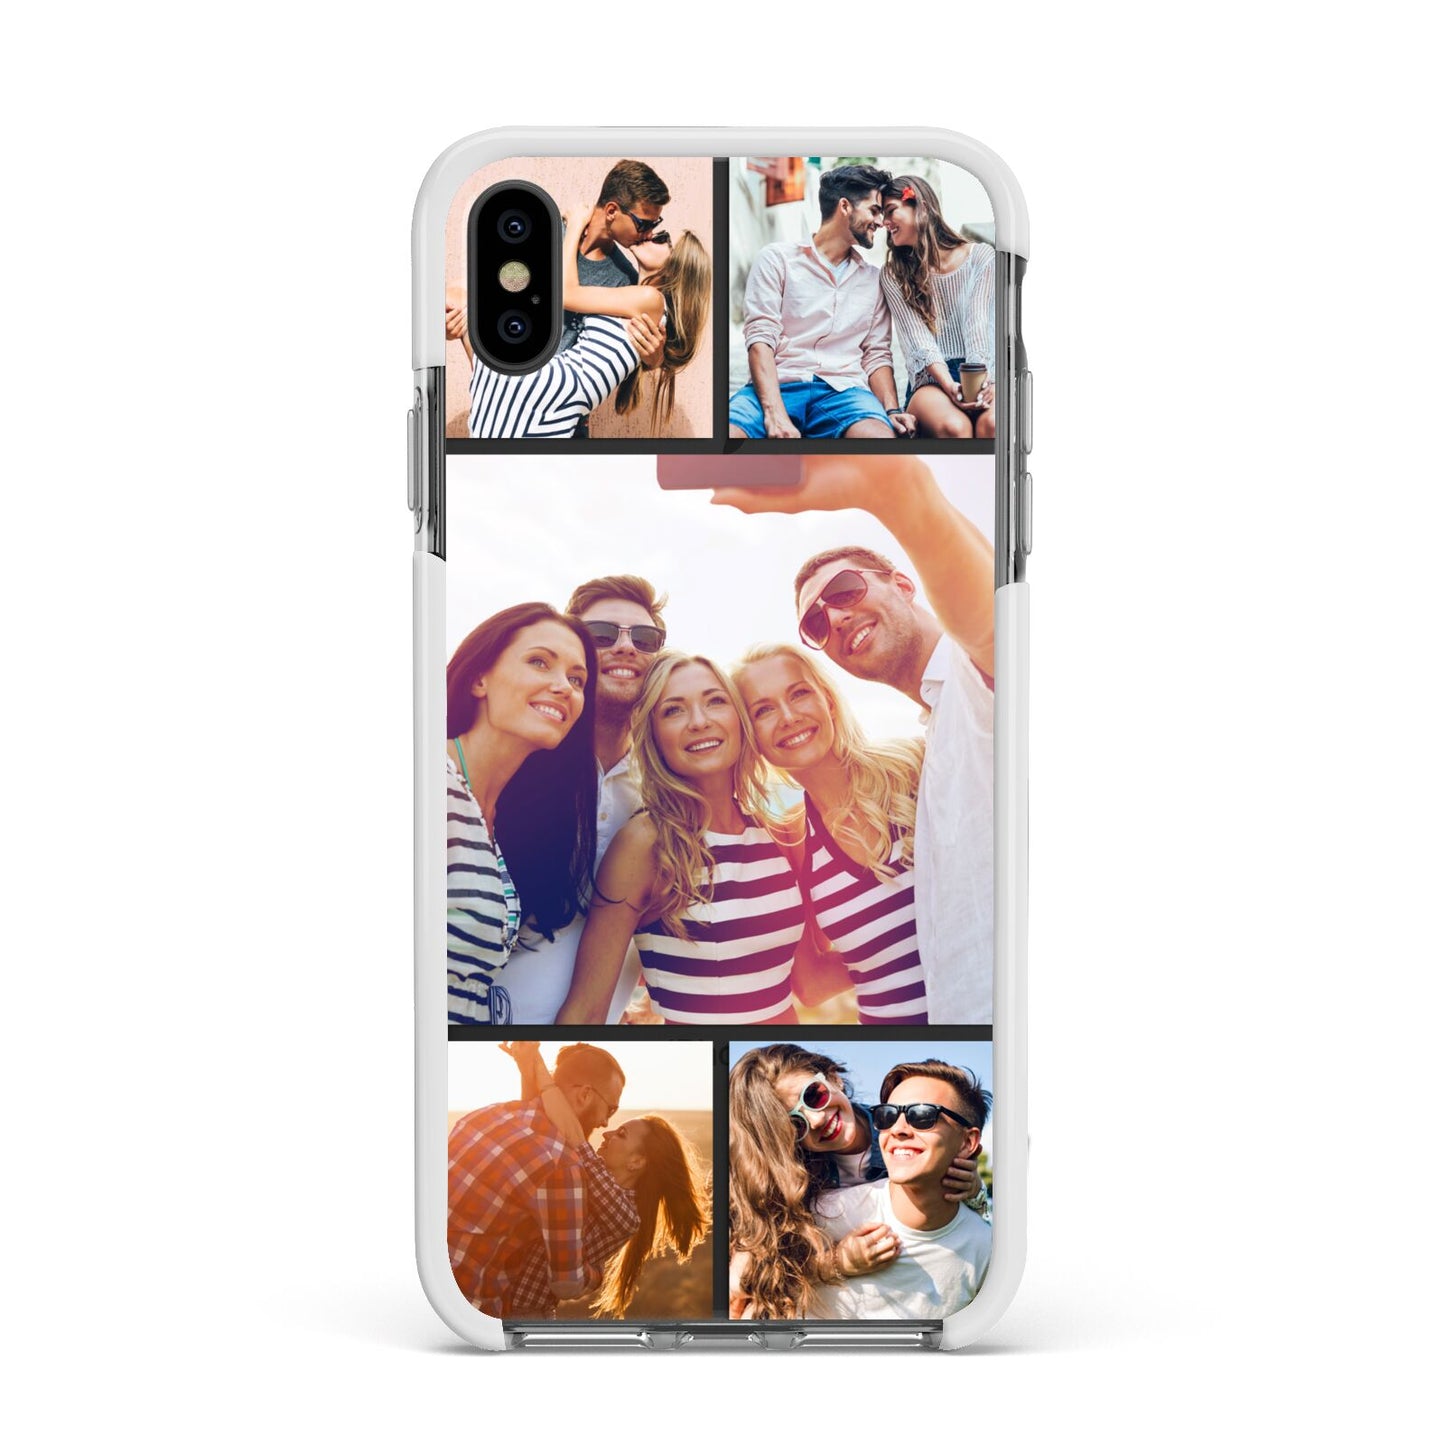 Tile Photo Collage Upload Apple iPhone Xs Max Impact Case White Edge on Black Phone